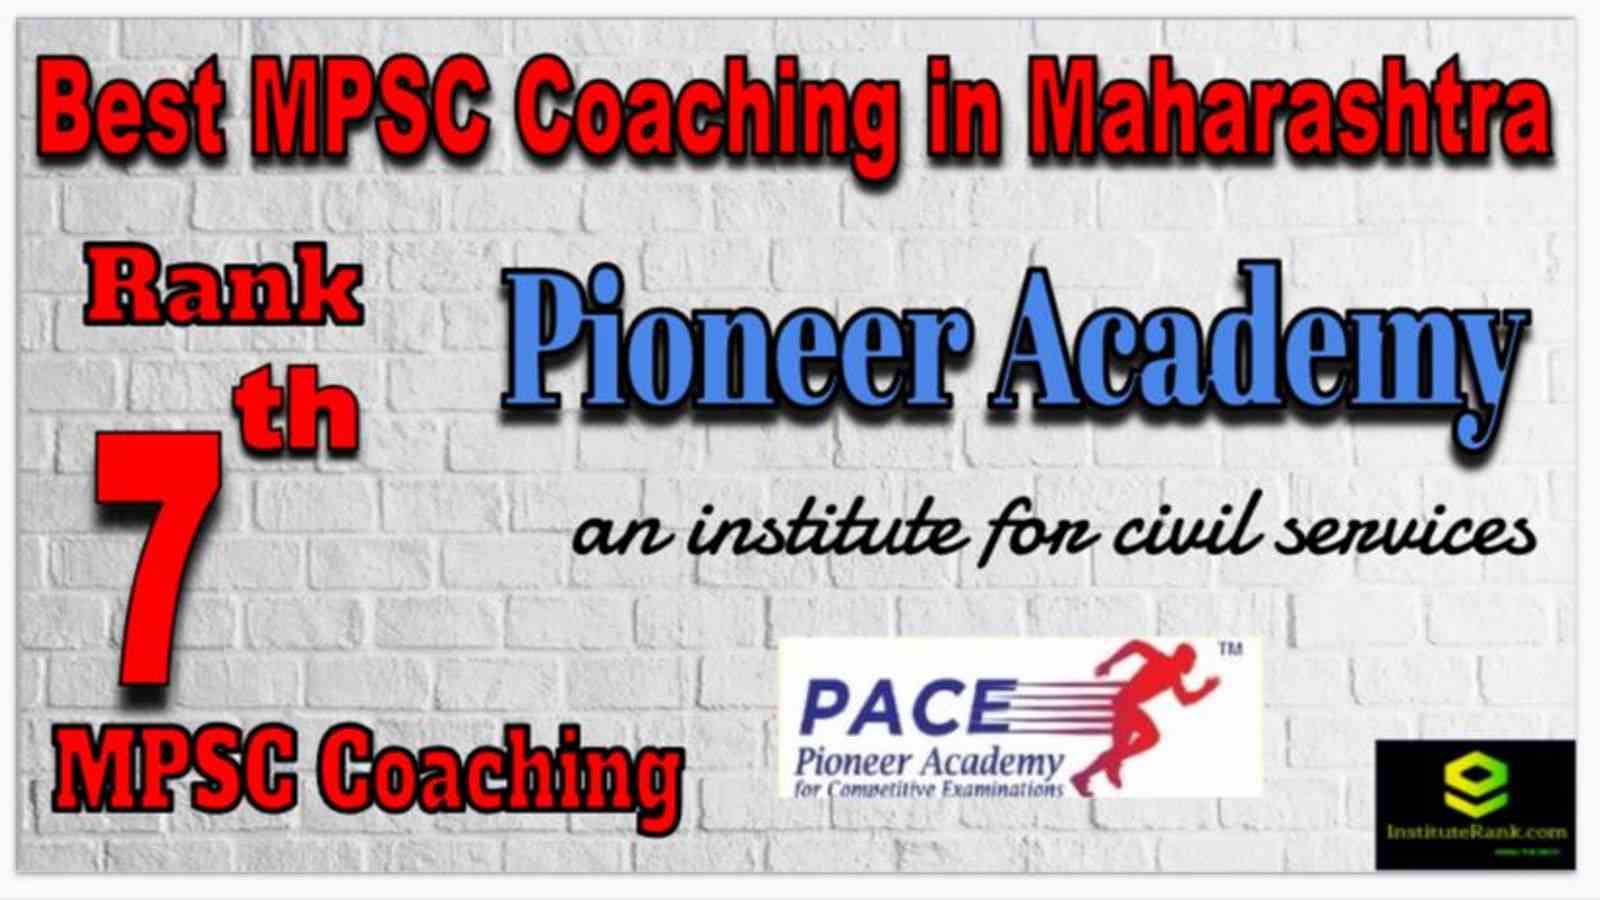 Rank 7 Best MPSC Coaching in Maharashtra